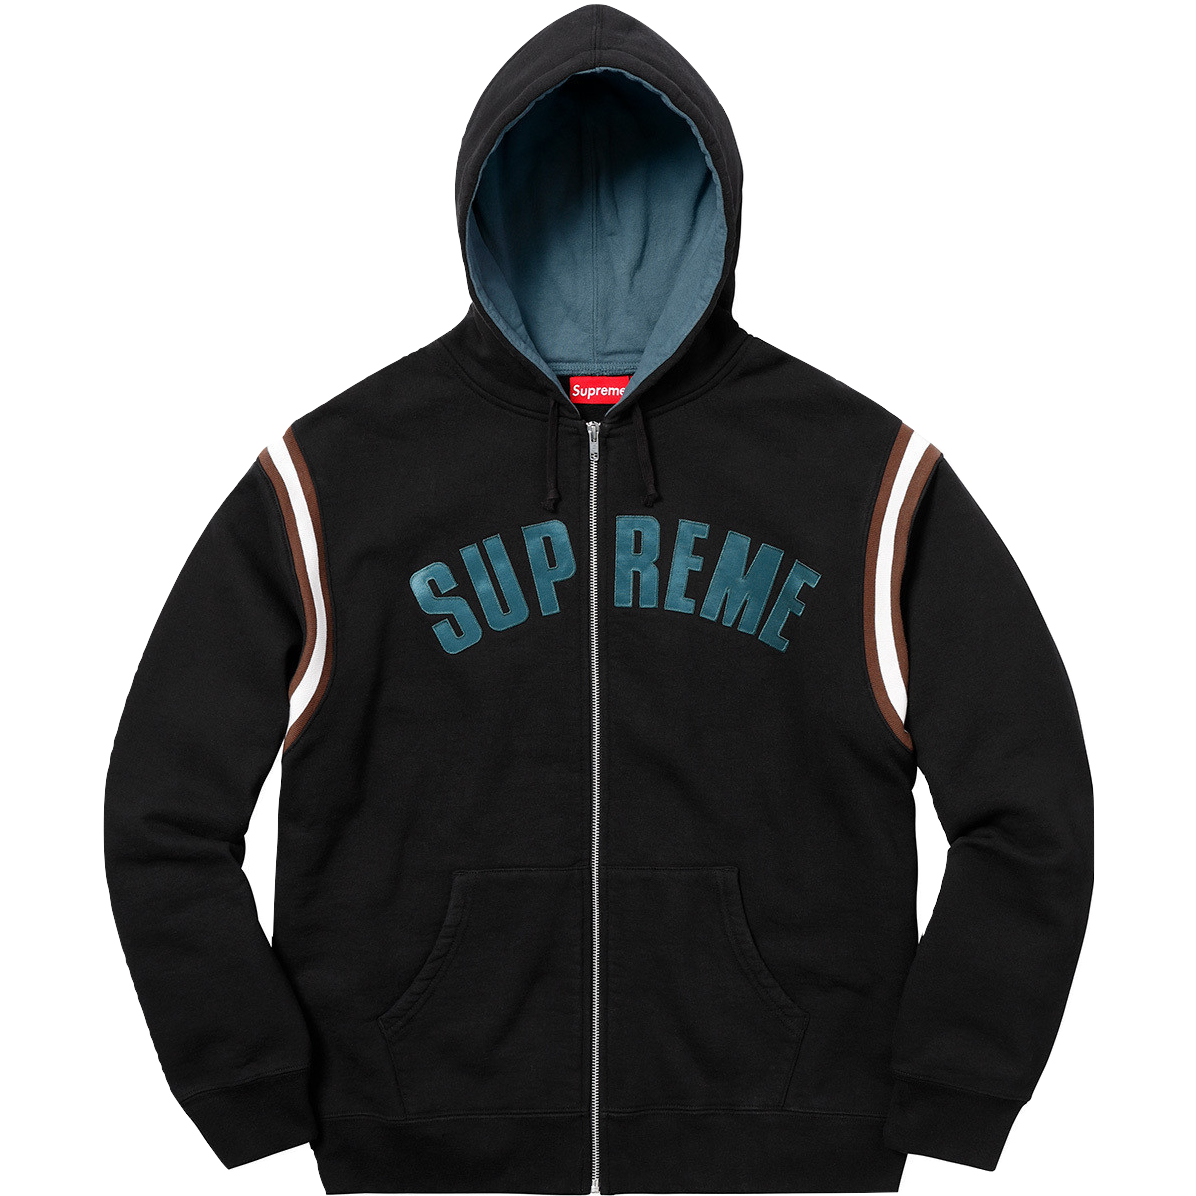 Supreme Jet Sleeve Zip Up Hooded Sweatshirt